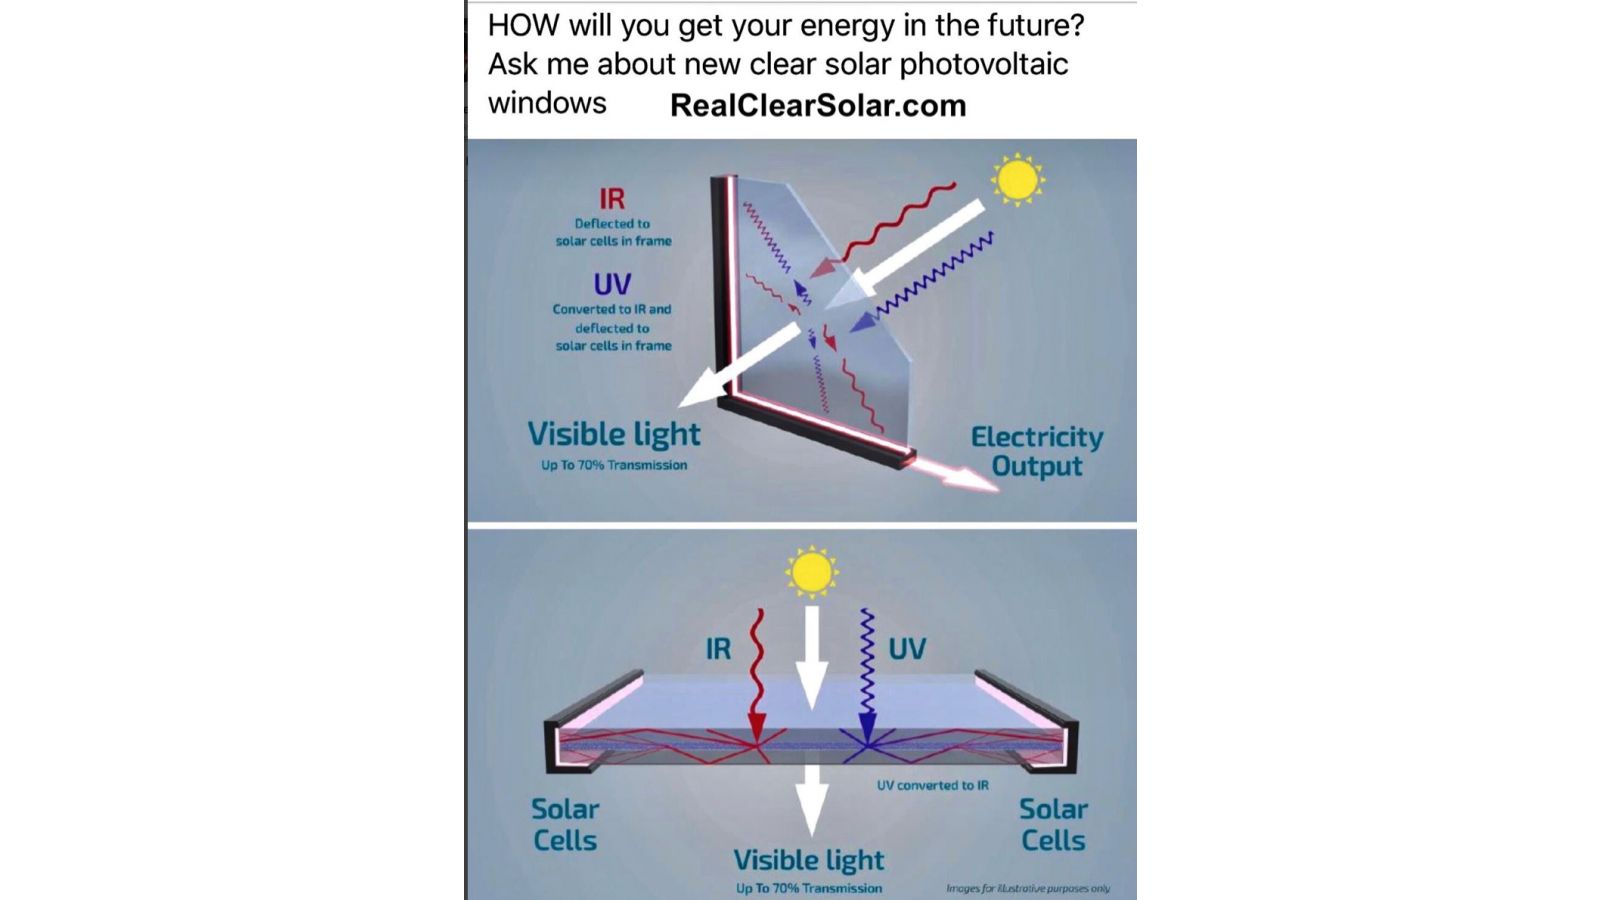 CLEAR Solar Photovoltaic IGU Window 